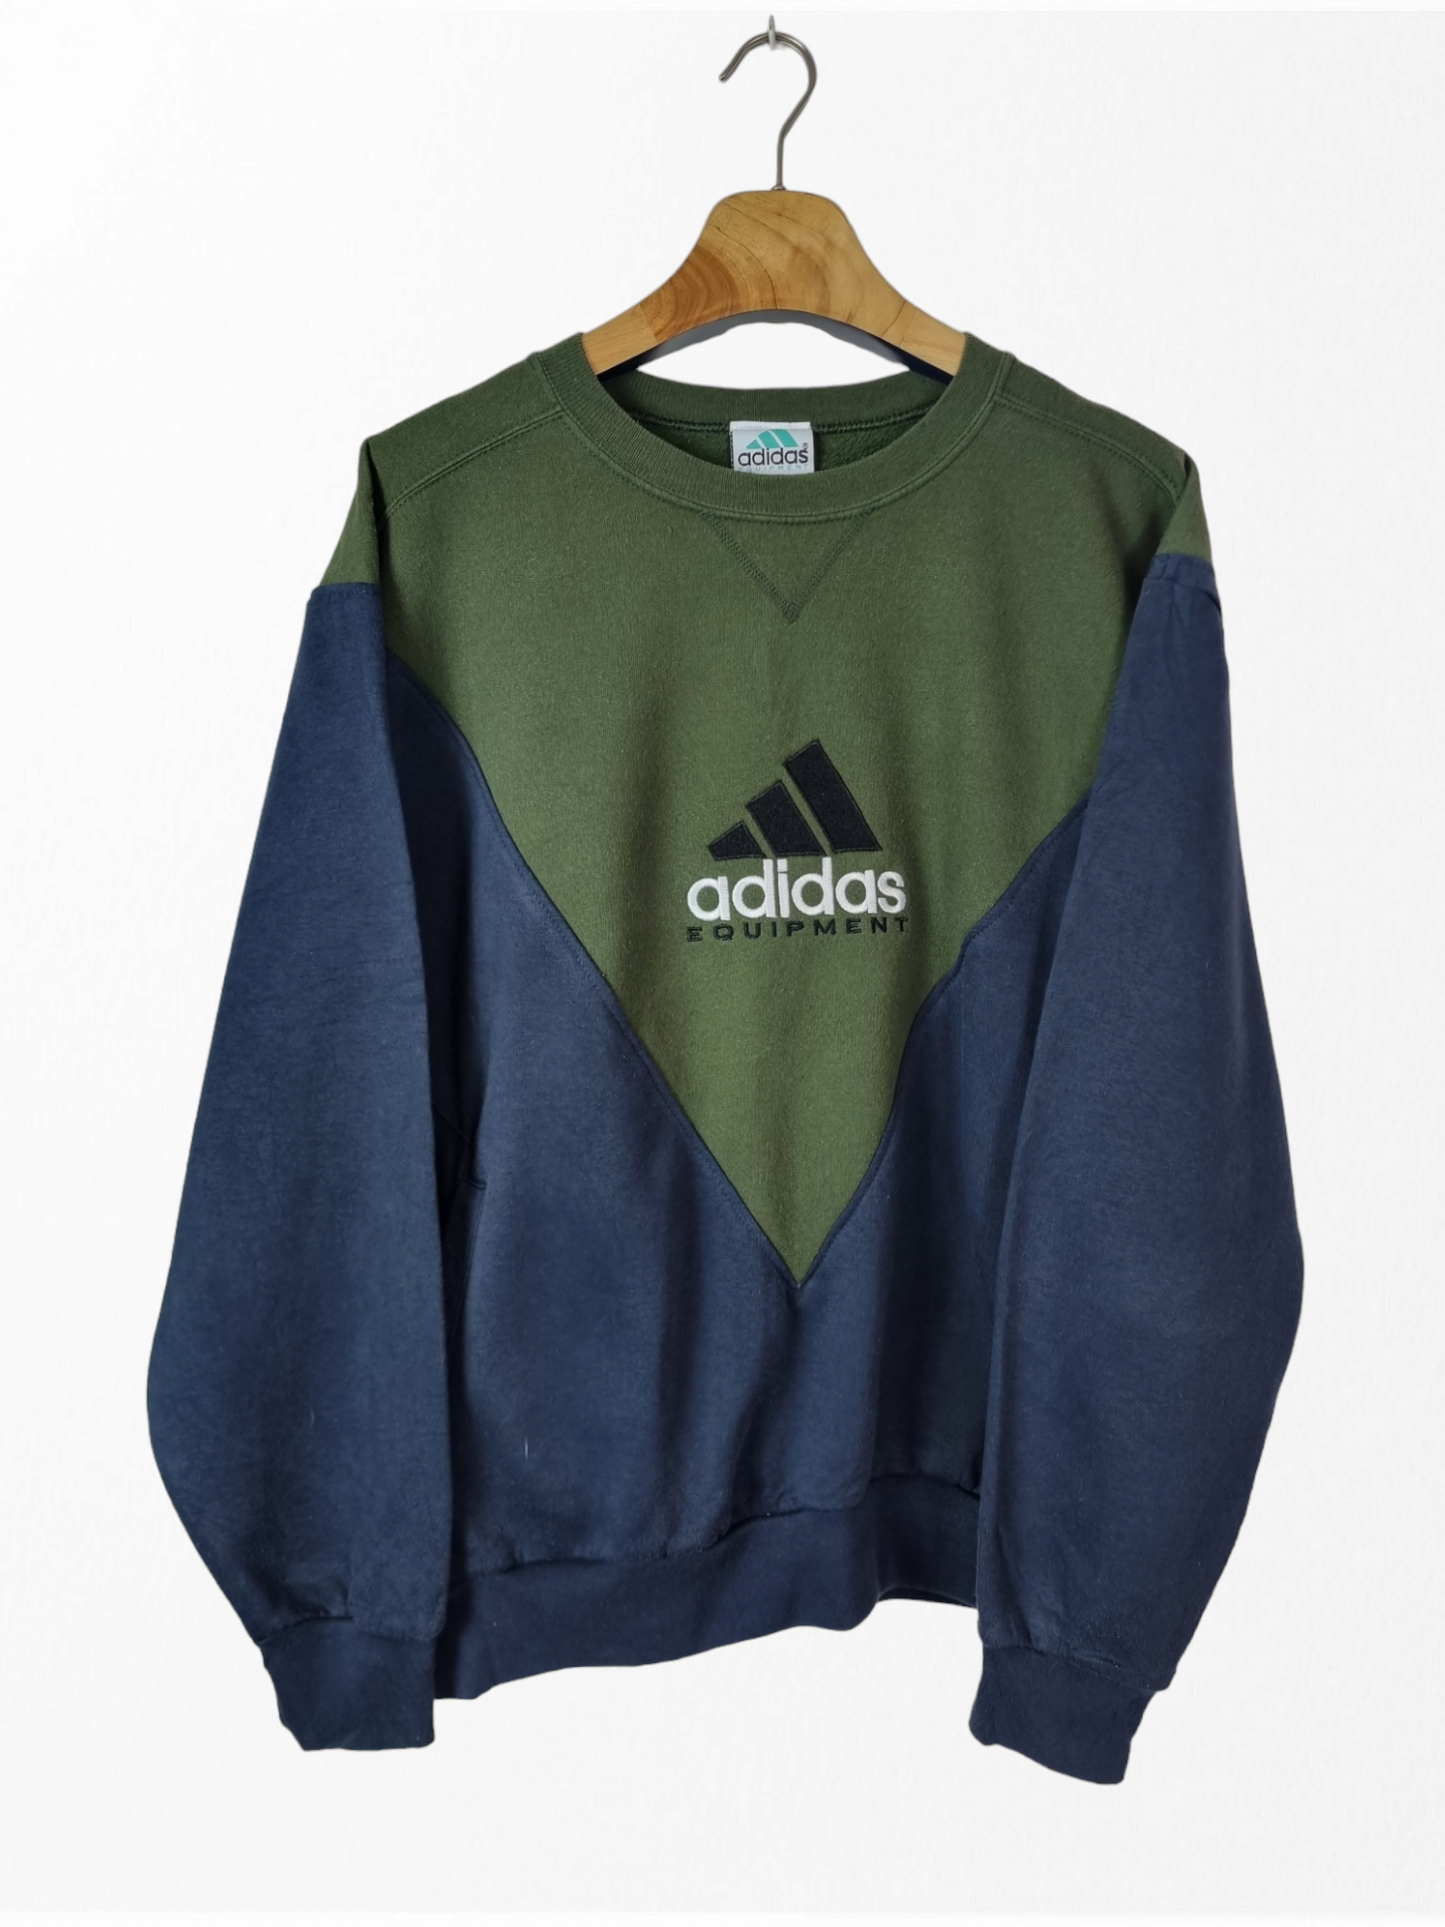 Adidas 90s equipement sweater maat L